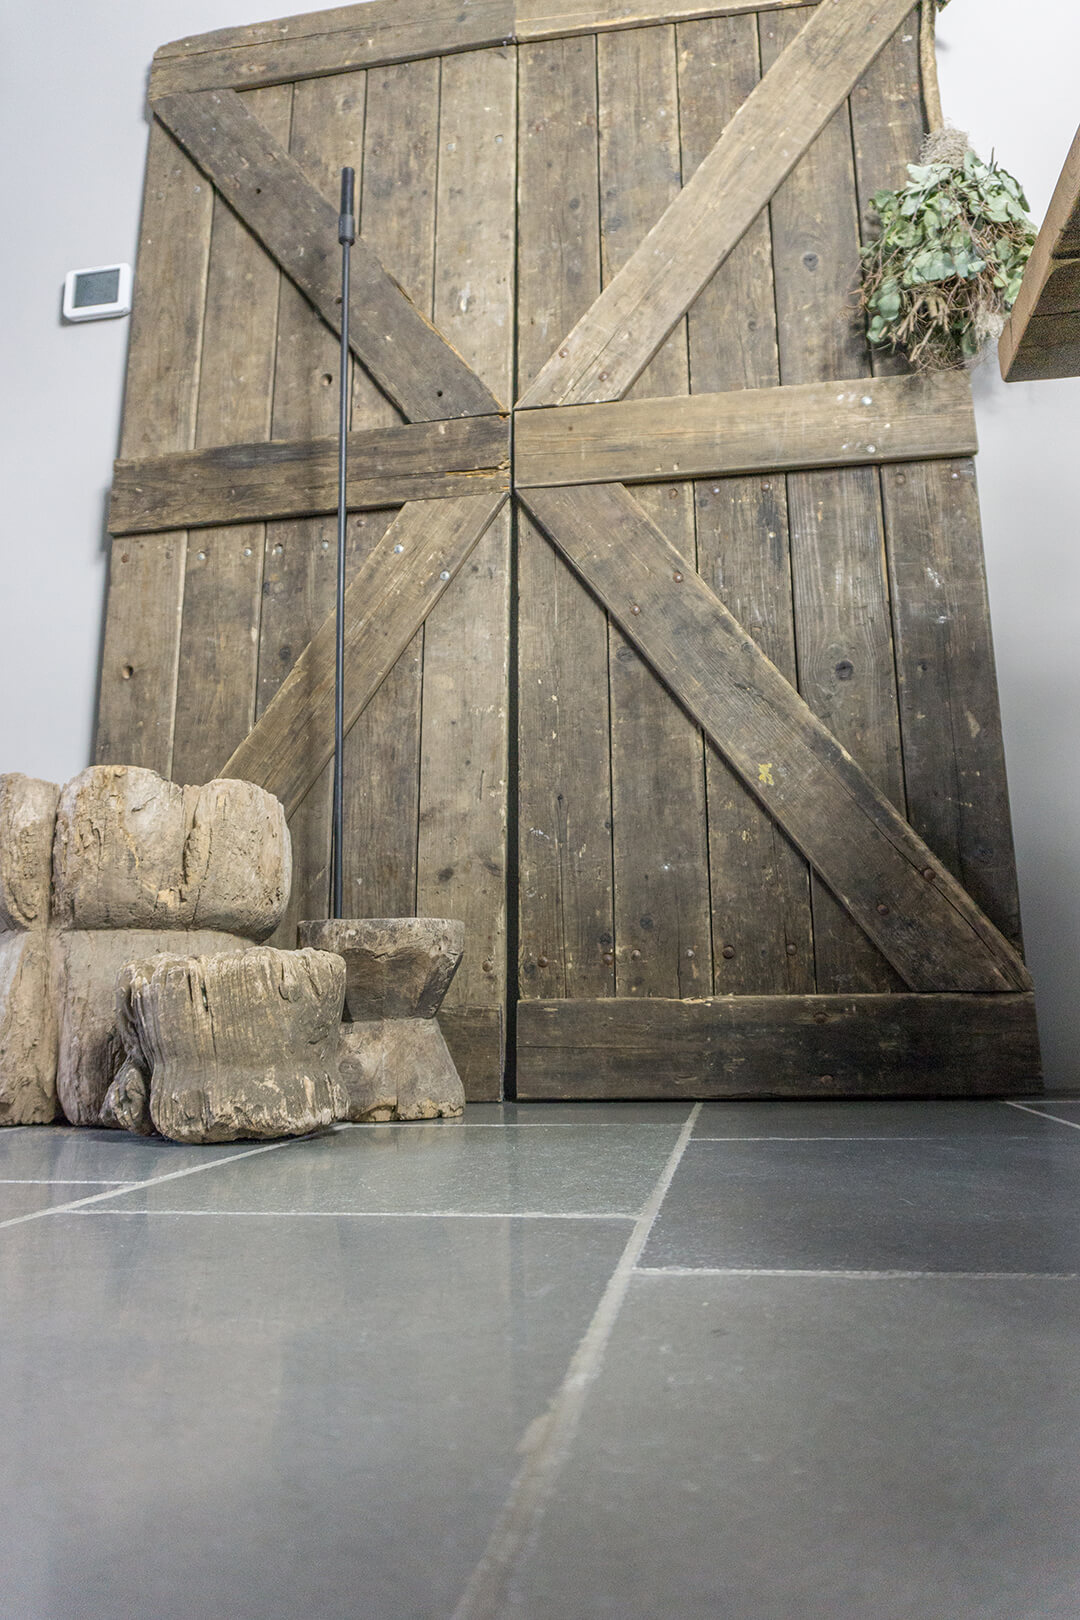 Cottage Stone Grey met oude houten deur